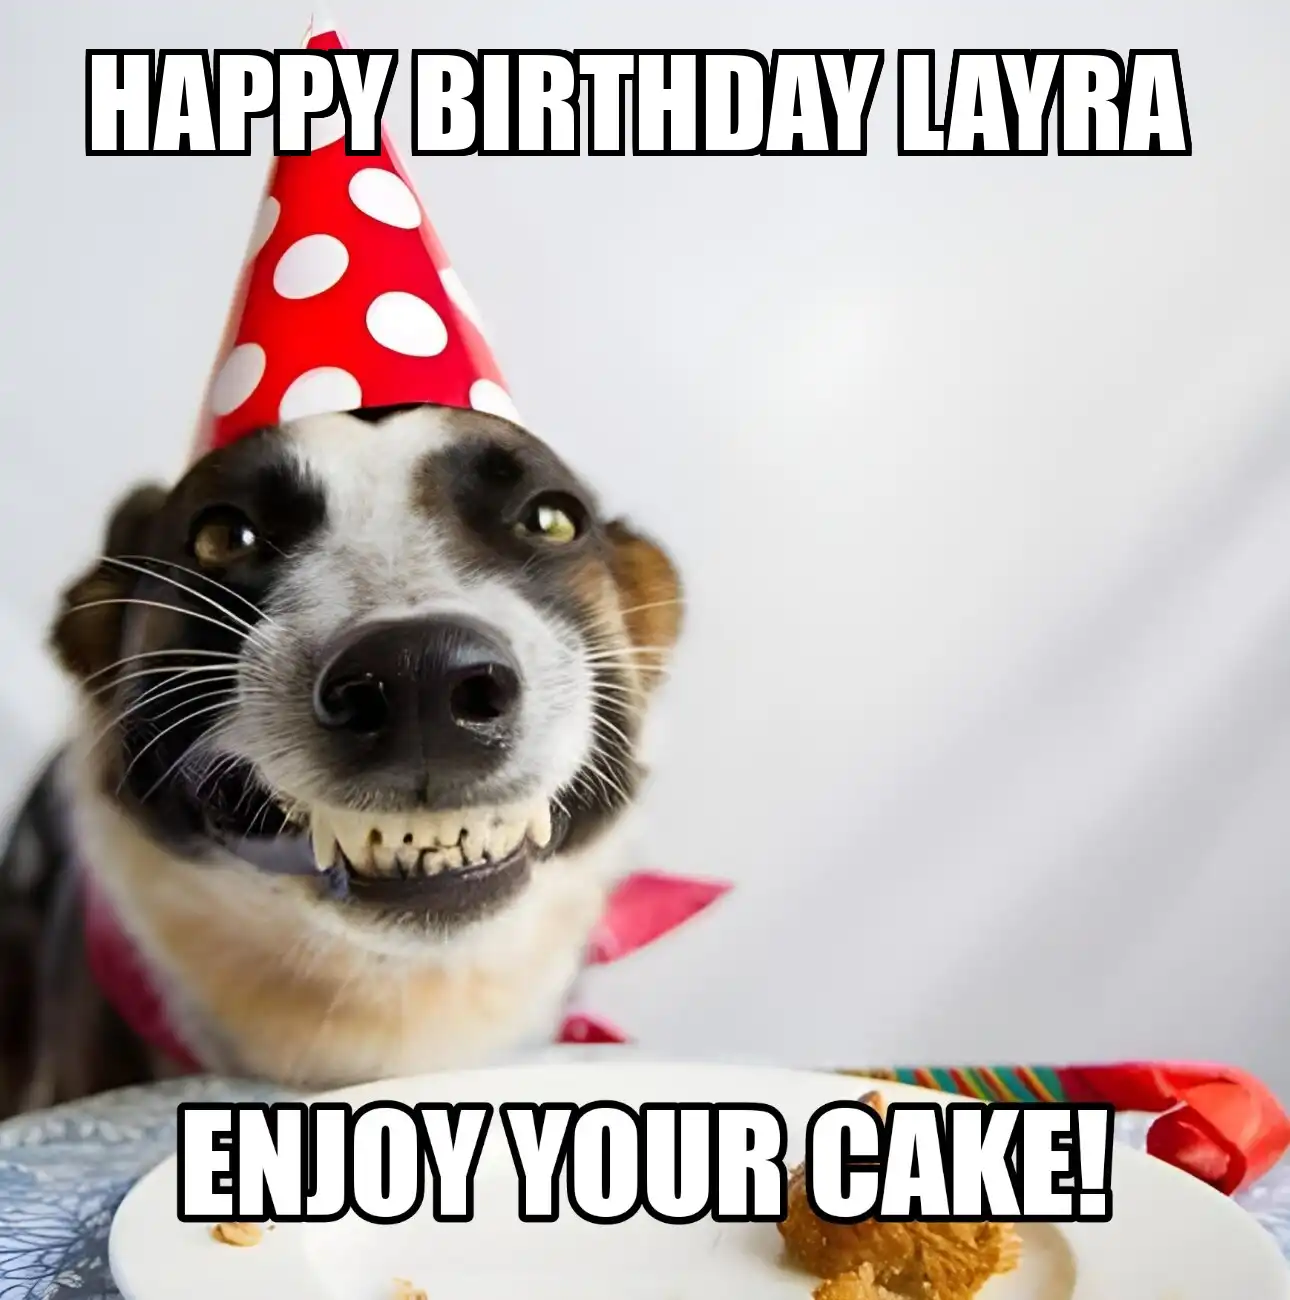 Happy Birthday Layra Enjoy Your Cake Dog Meme